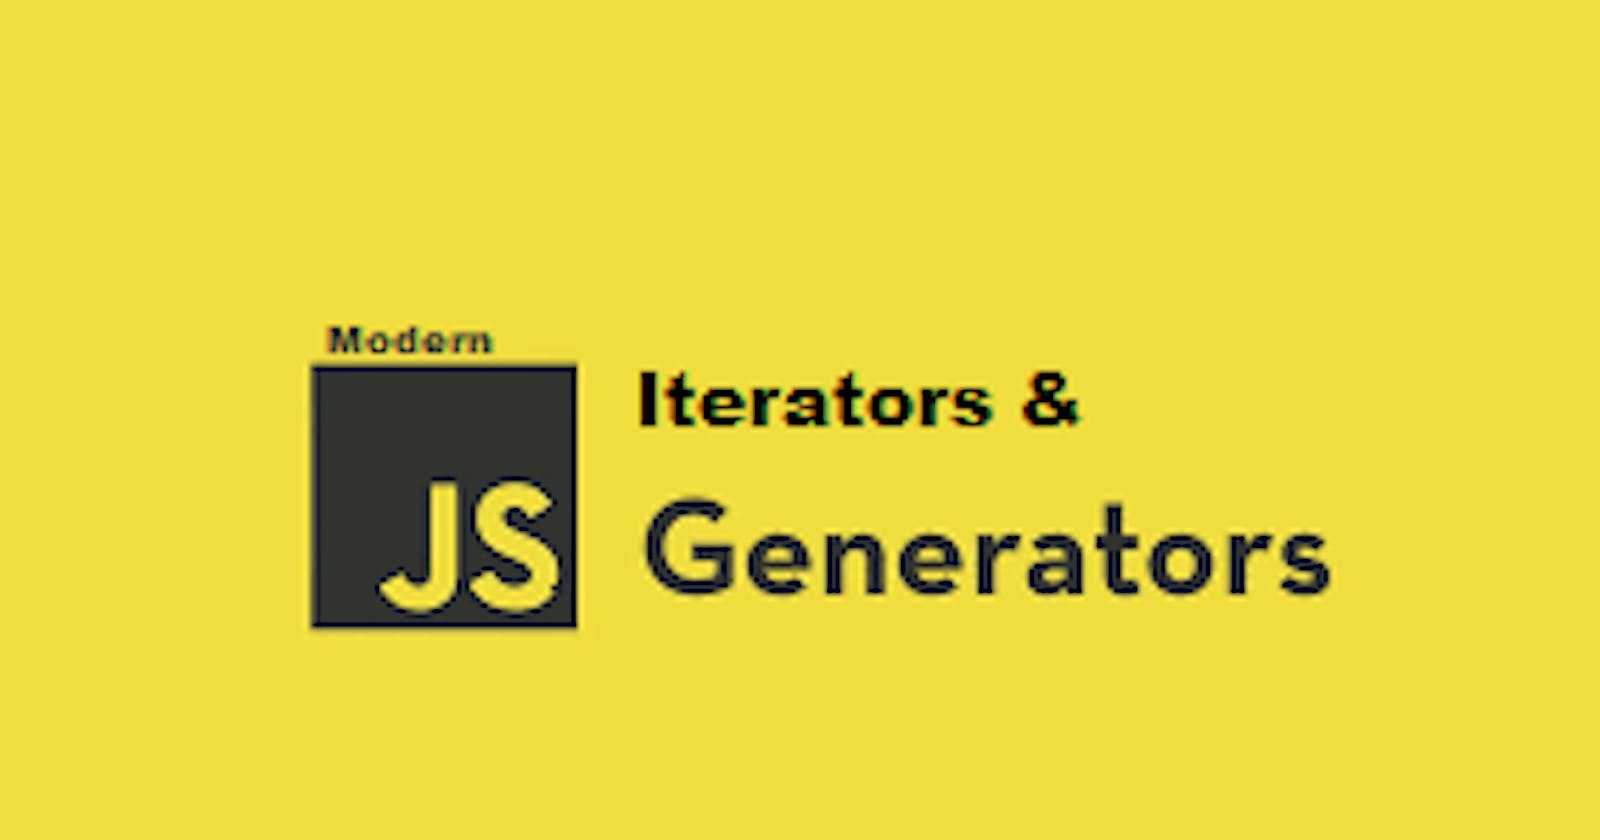 Generators - Modern Javascript